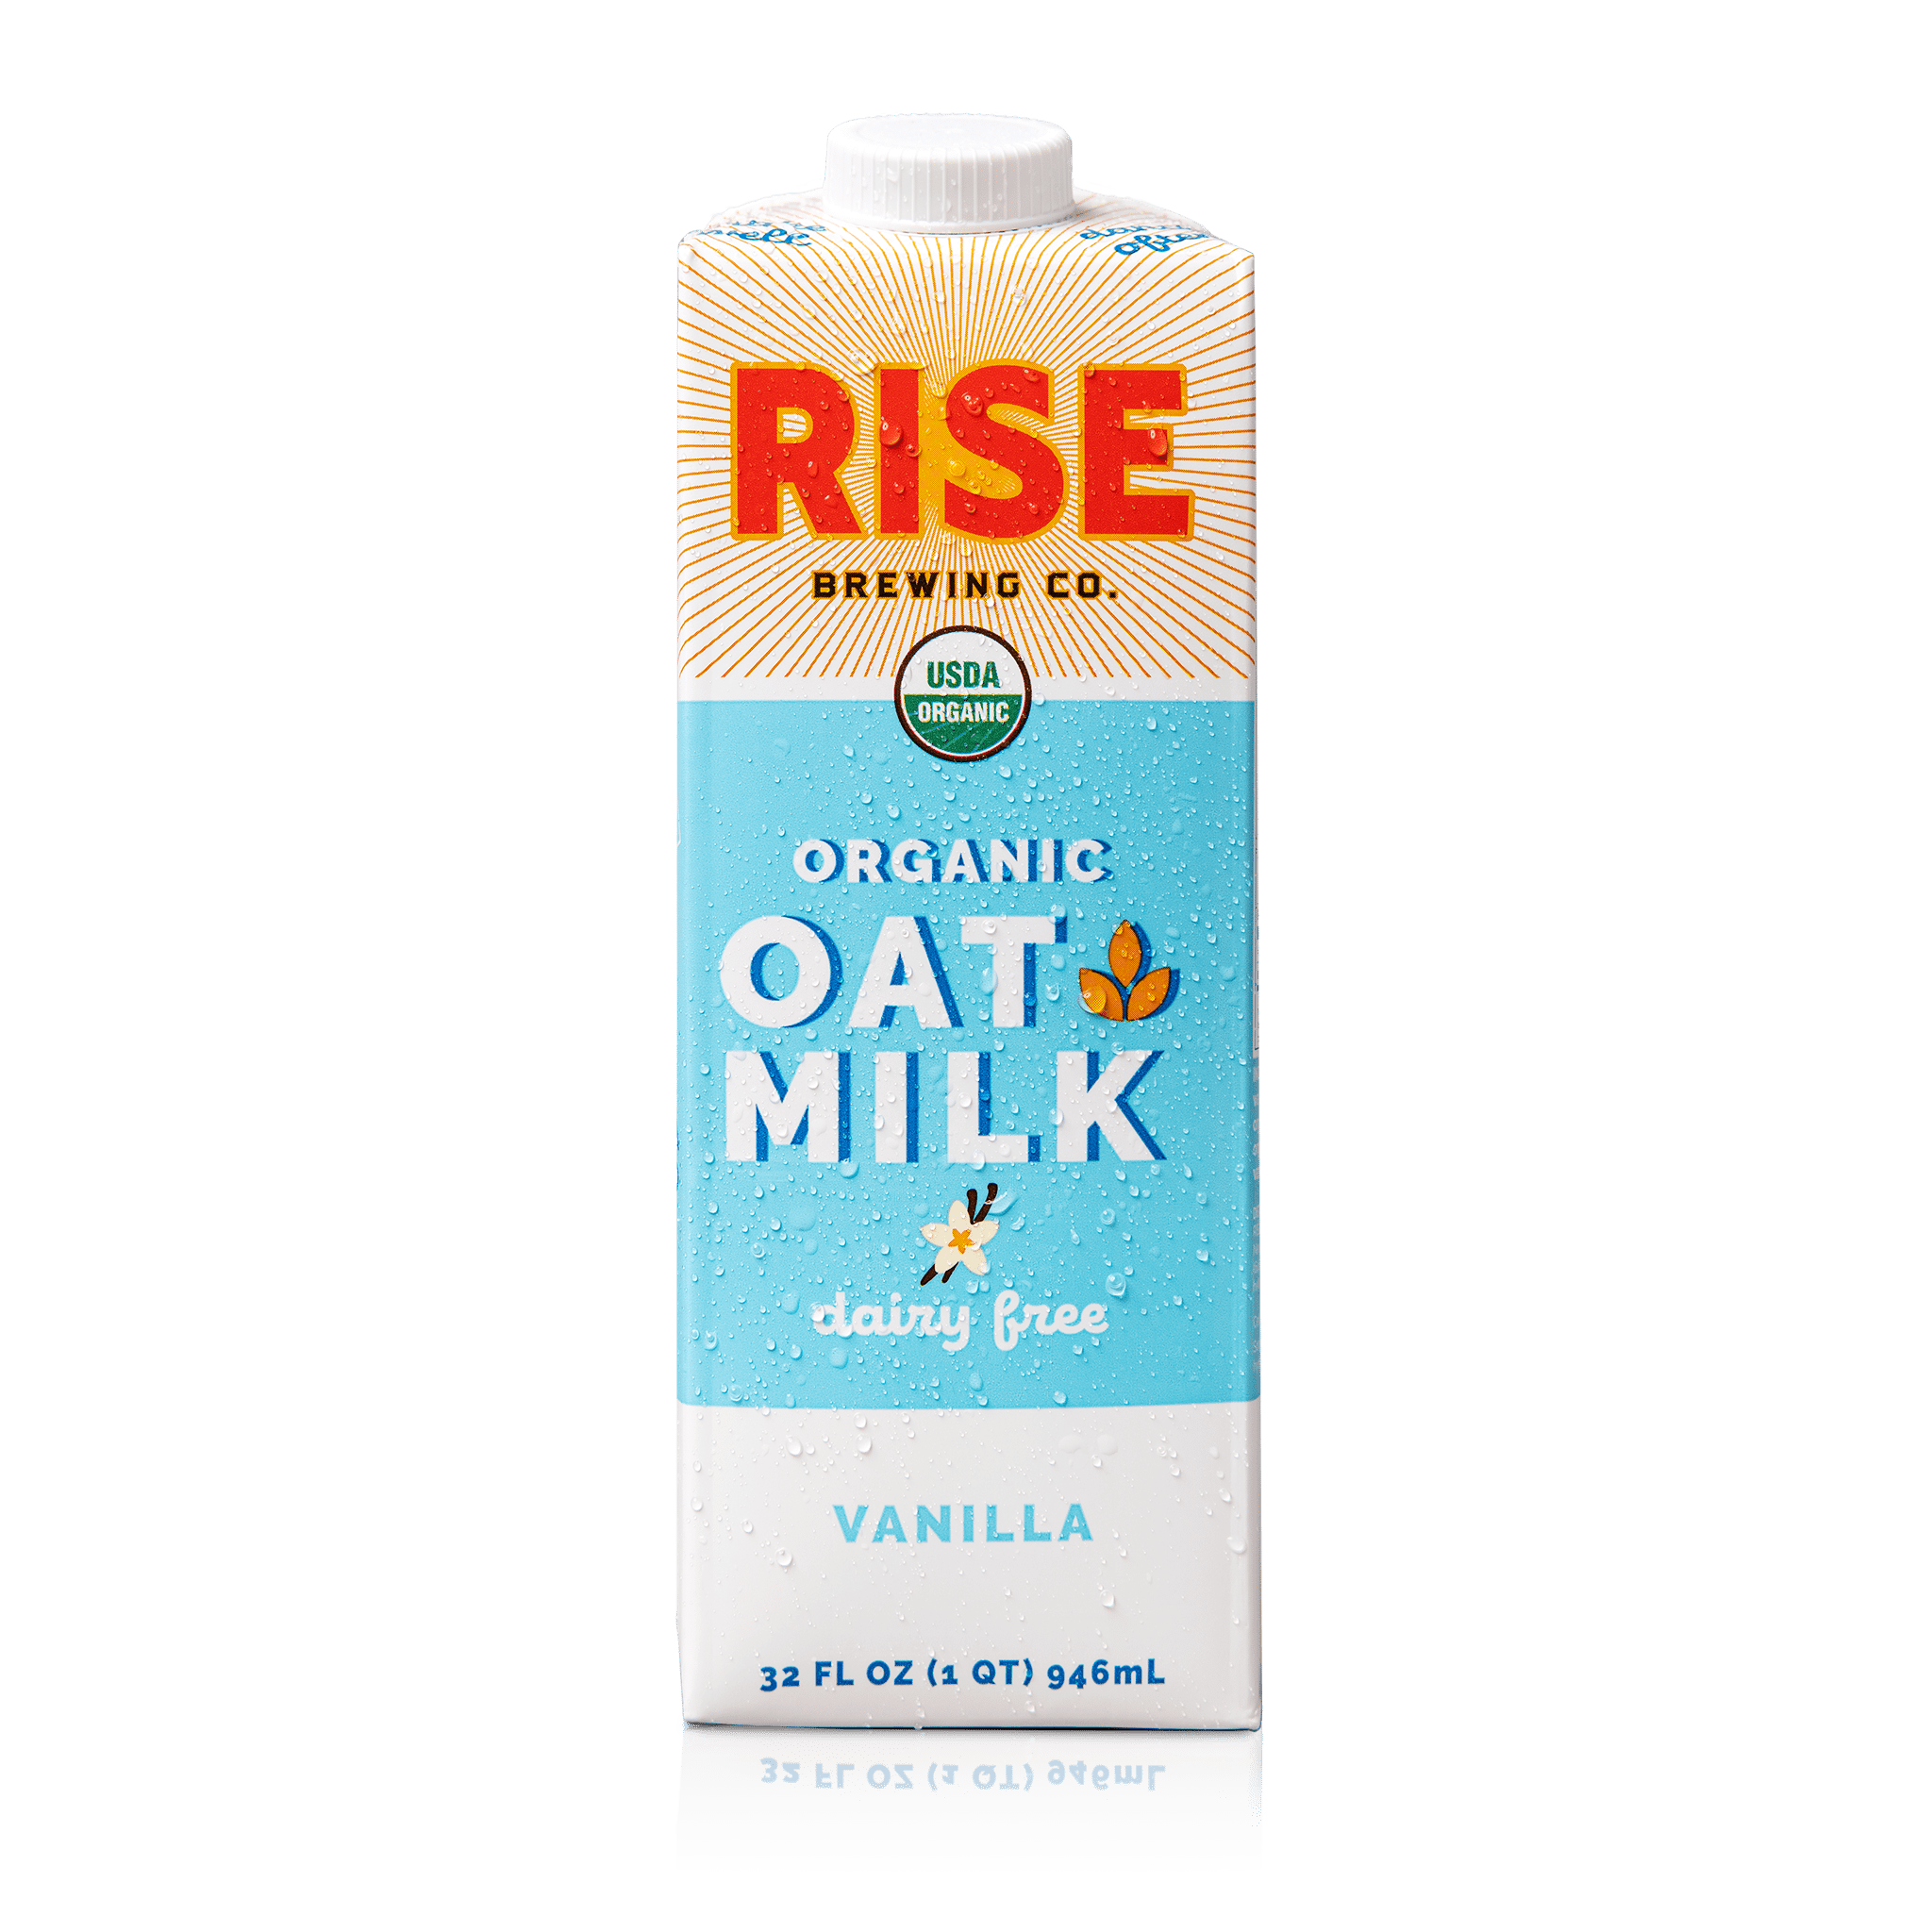 RISE Brewing Co., Vanilla Oat Milk 6 units per case 32.0 fl